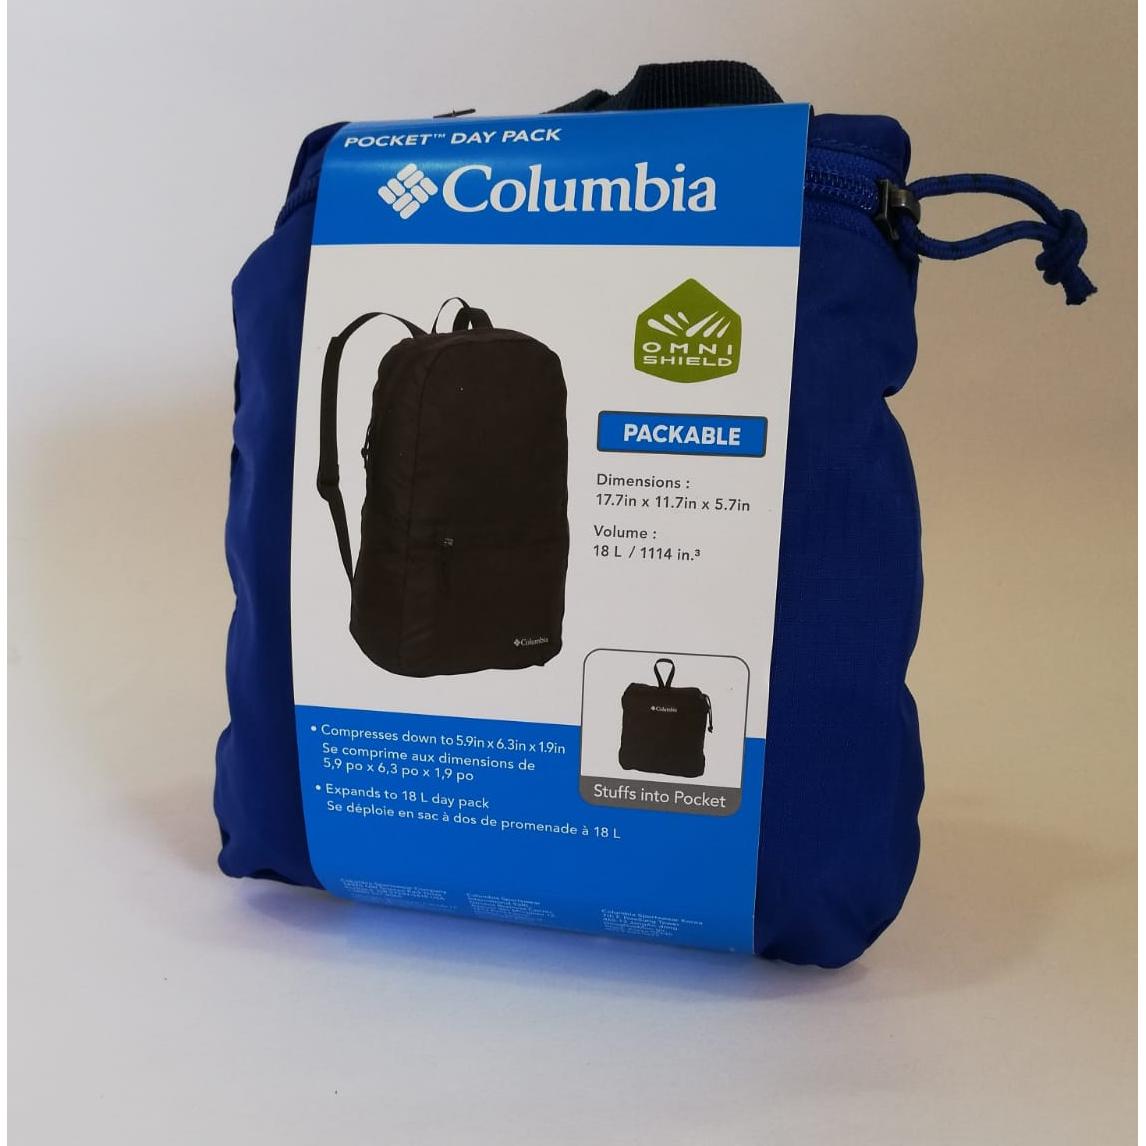 Salveque de bolsillo Columbia (Pocket day pack), color azul. - The Gift Shop Costa Rica